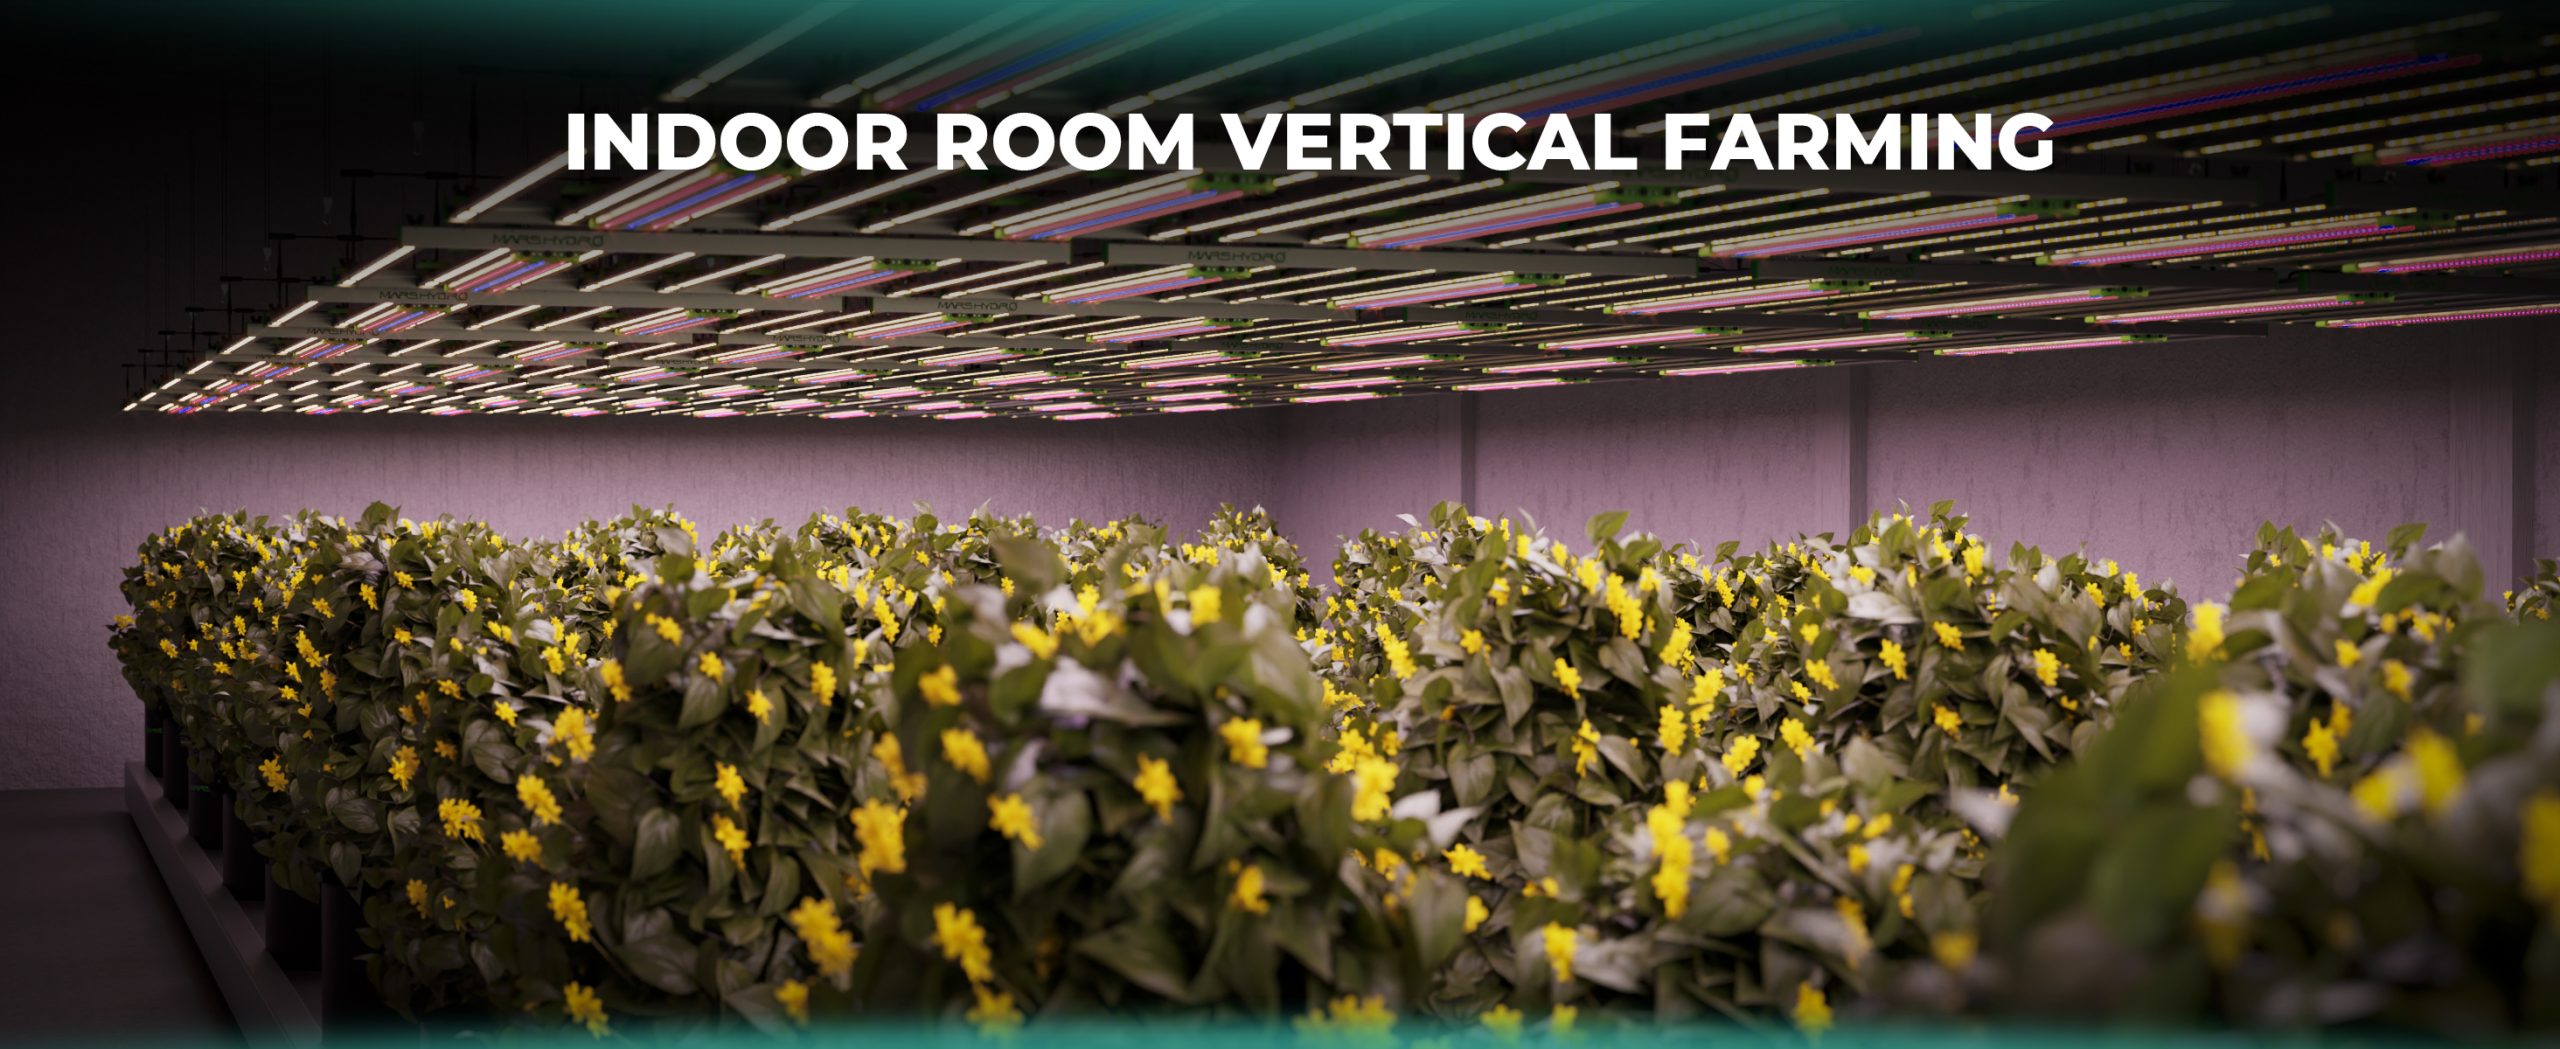 indoor room vertical farming with adlite supplemental light